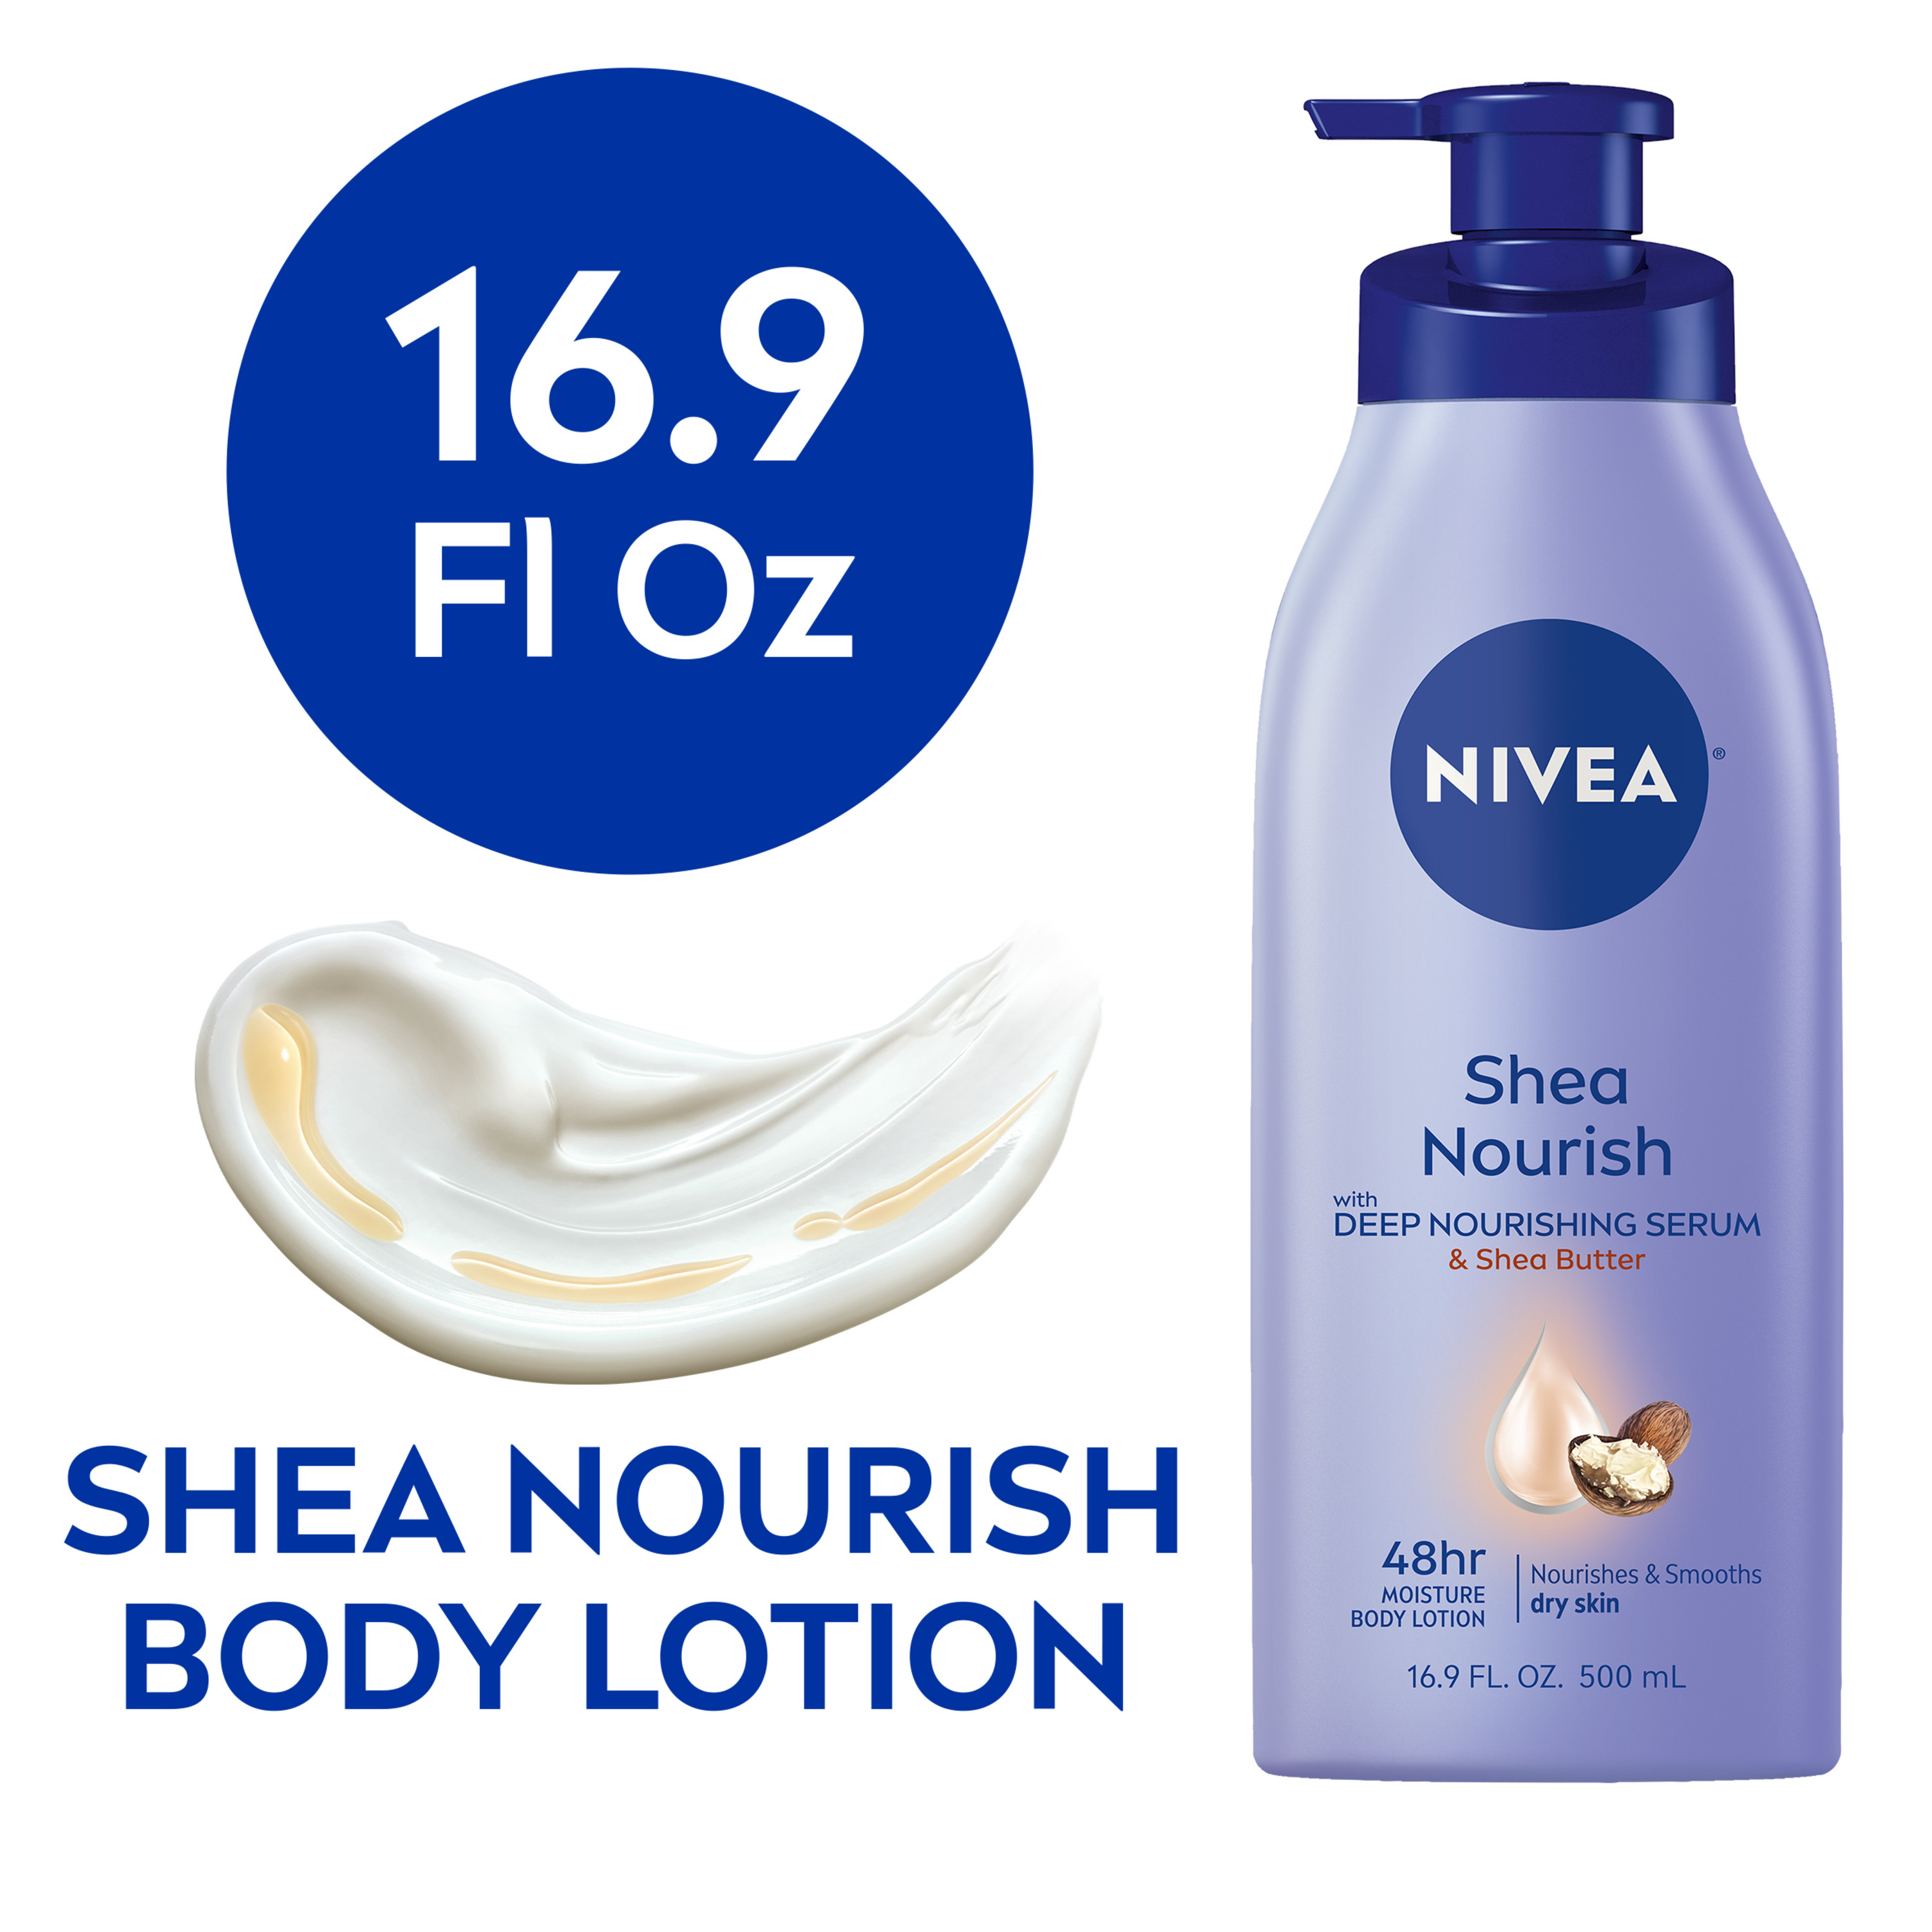 NIVEA Shea Nourish Body Lotion, Dry Skin Lotion with Shea Butter, 16.9 Fl Oz Pump Bottle - image 1 of 11